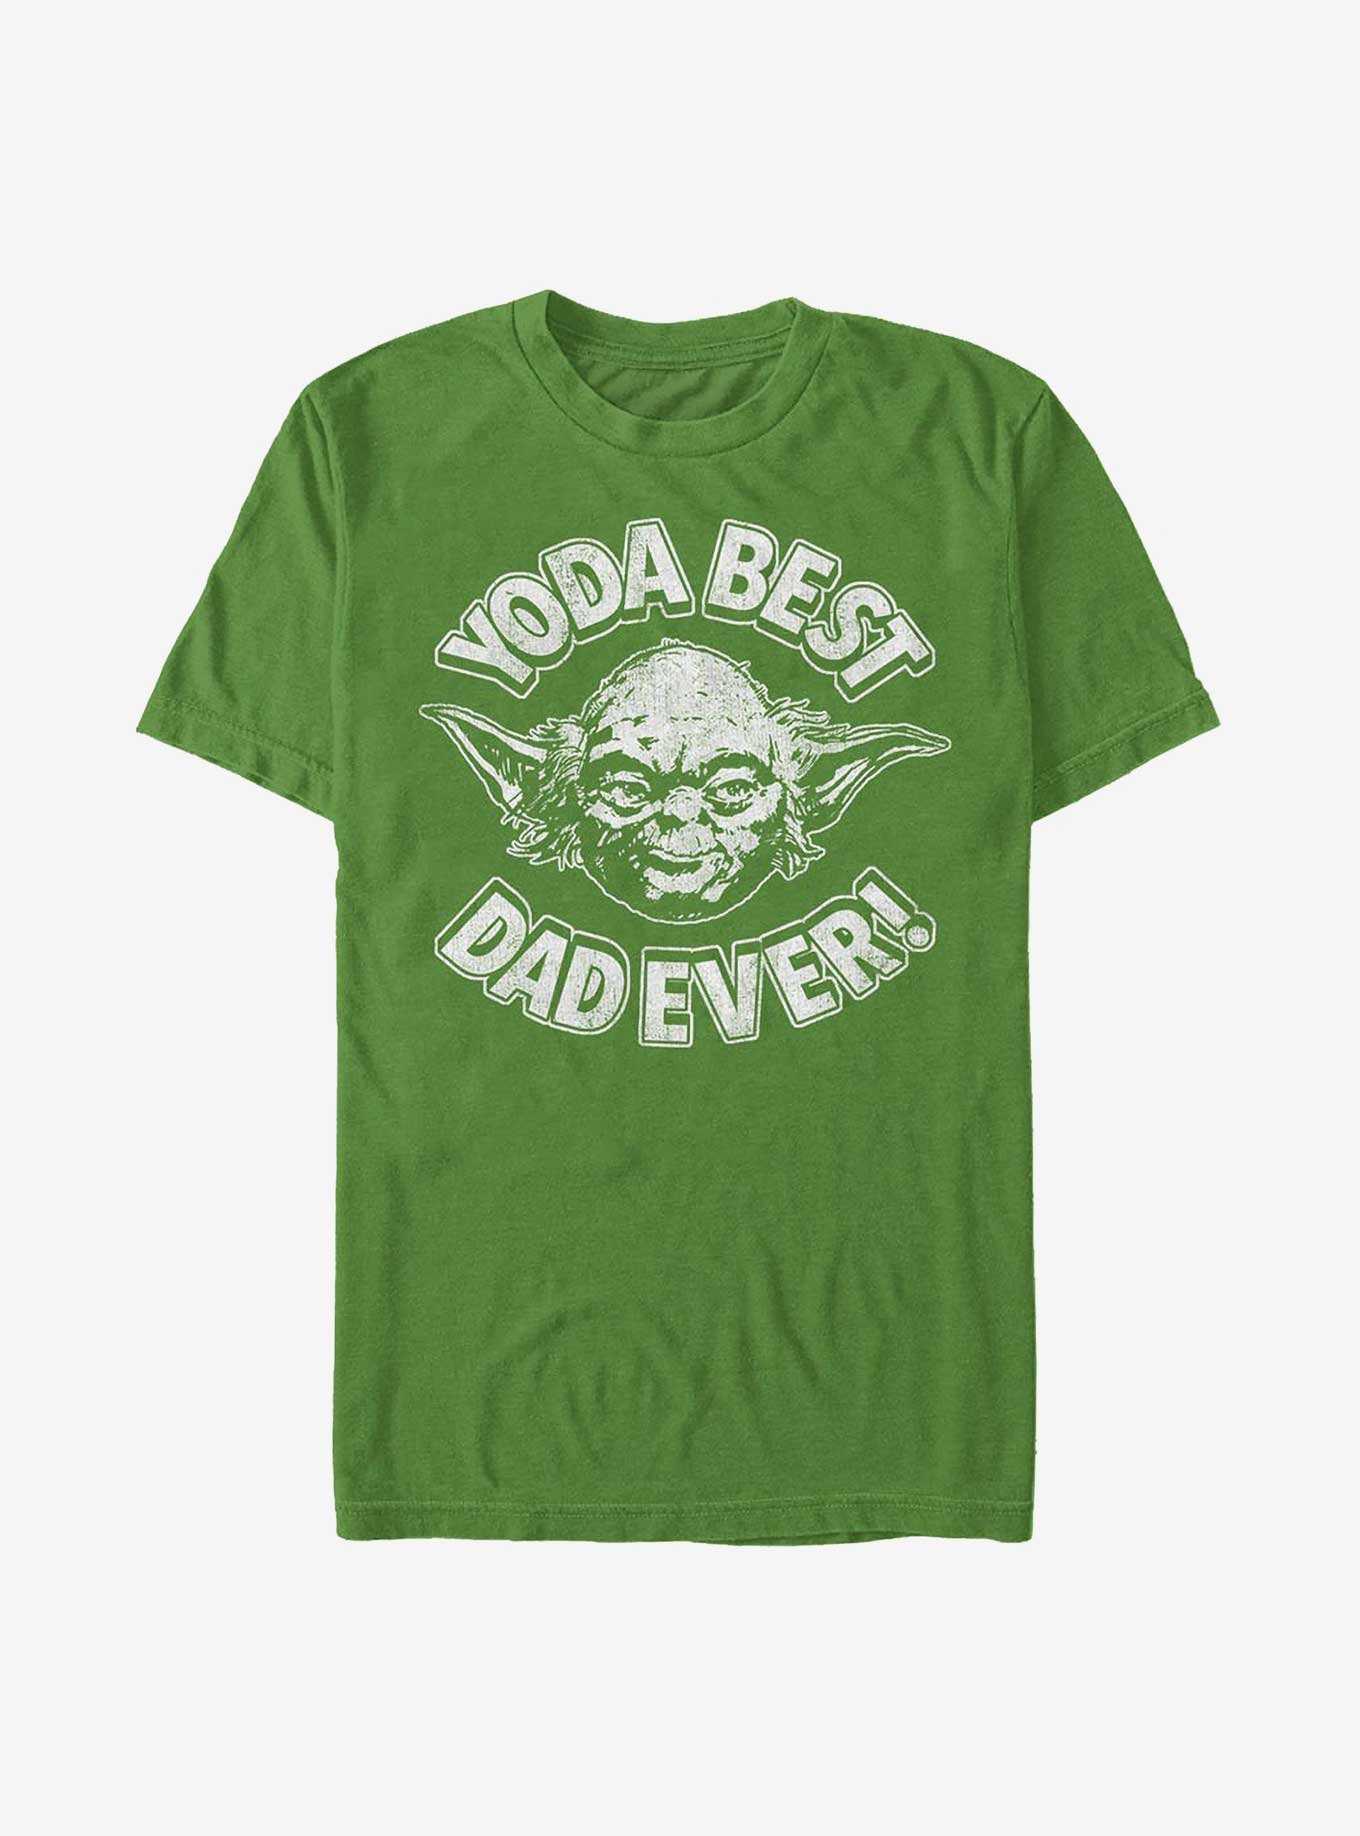 Star Wars Yoda Best Dad T-Shirt, , hi-res